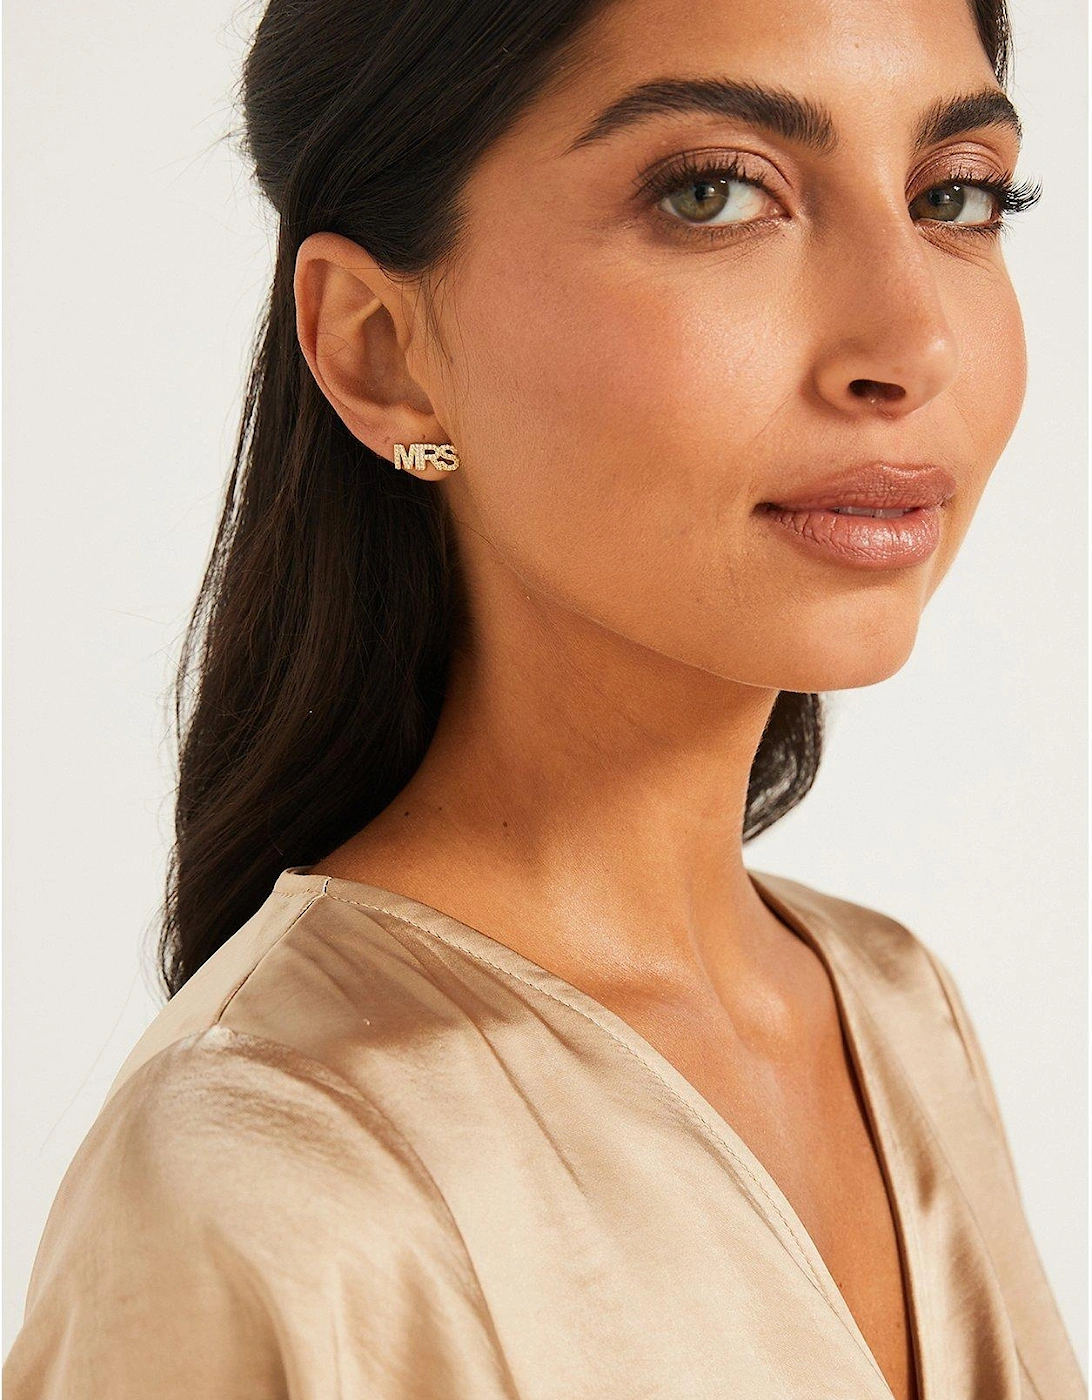 Mrs Initial Earrings - White Gold, 2 of 1